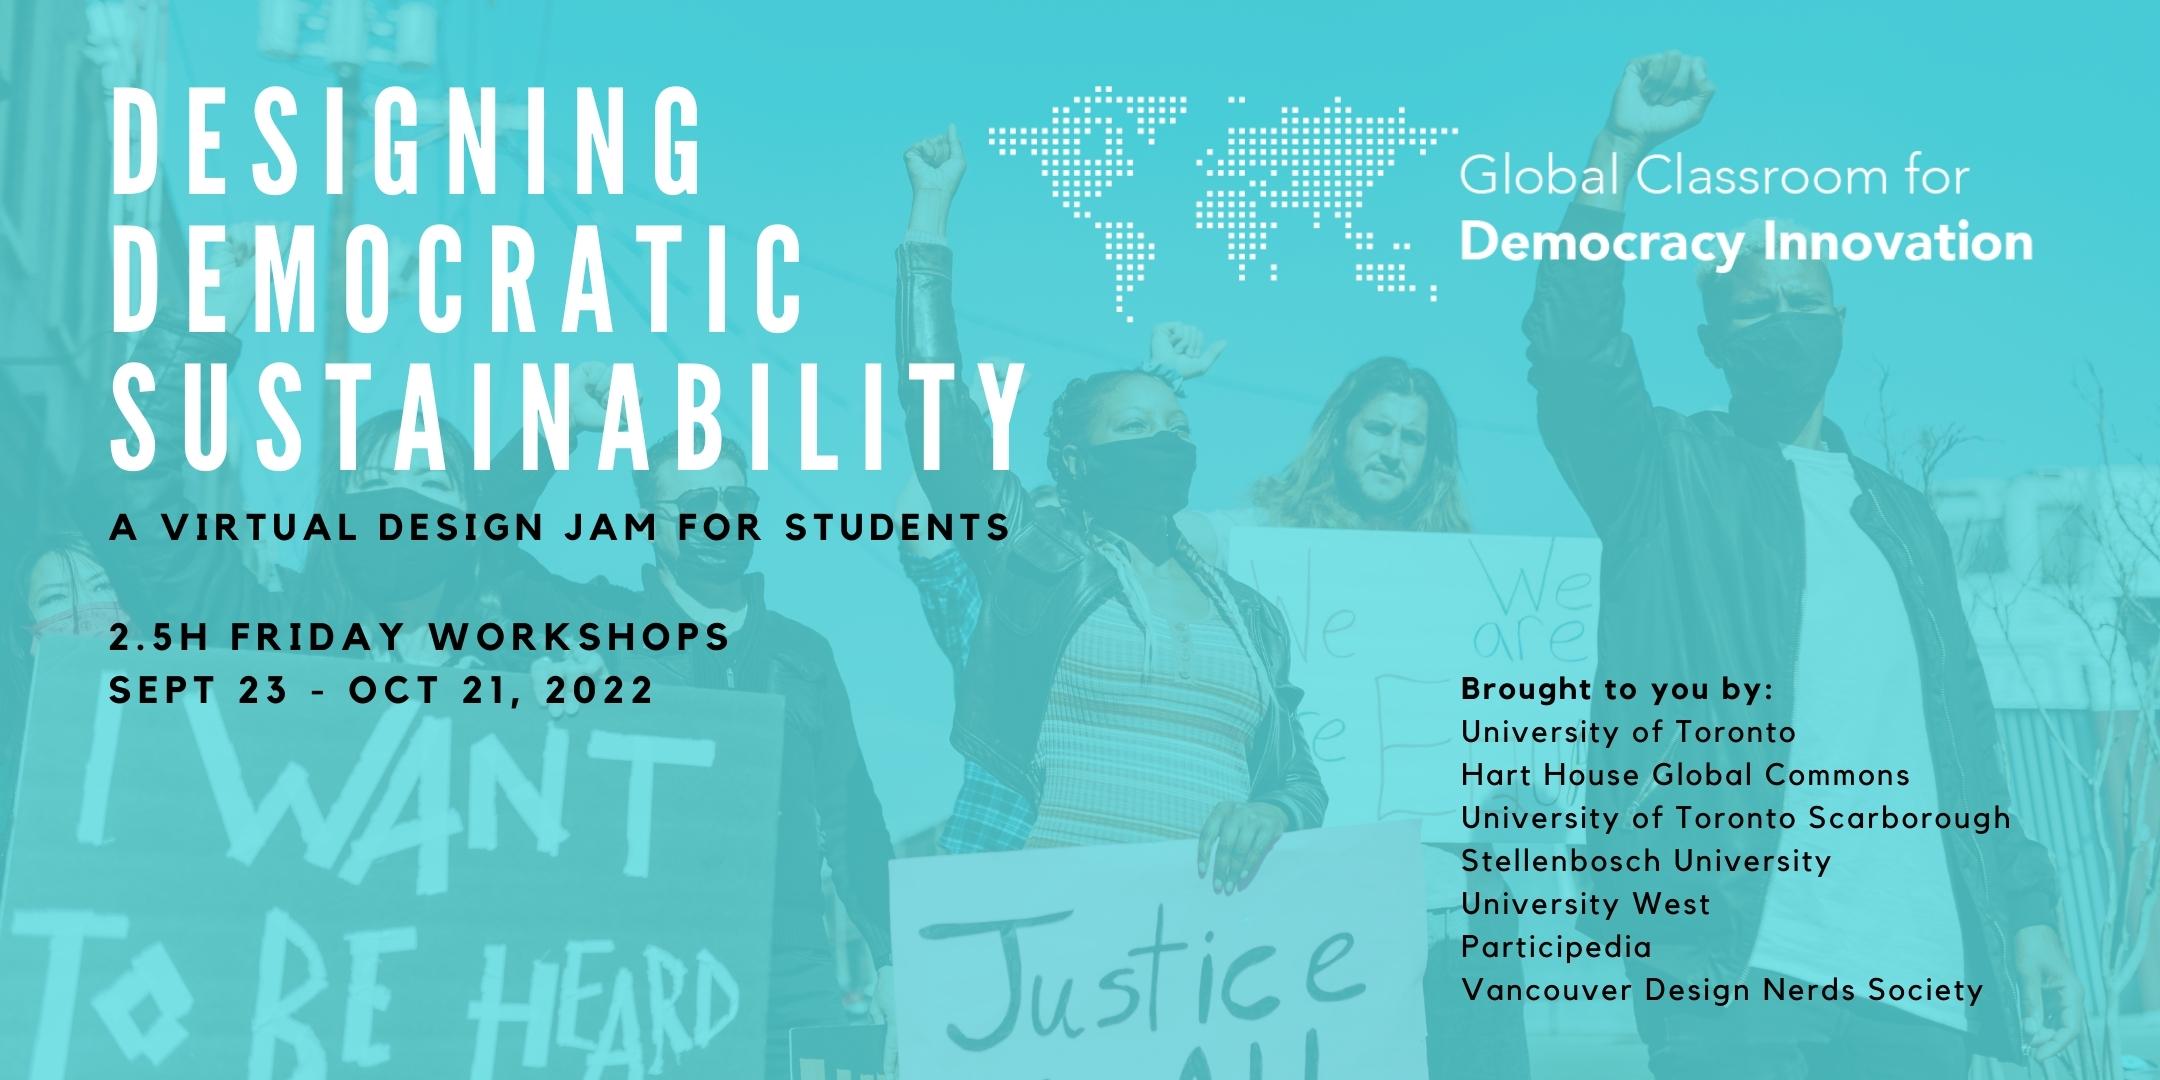 Global Classroom for Democracy Innovation: Designing Democratic Sustainability